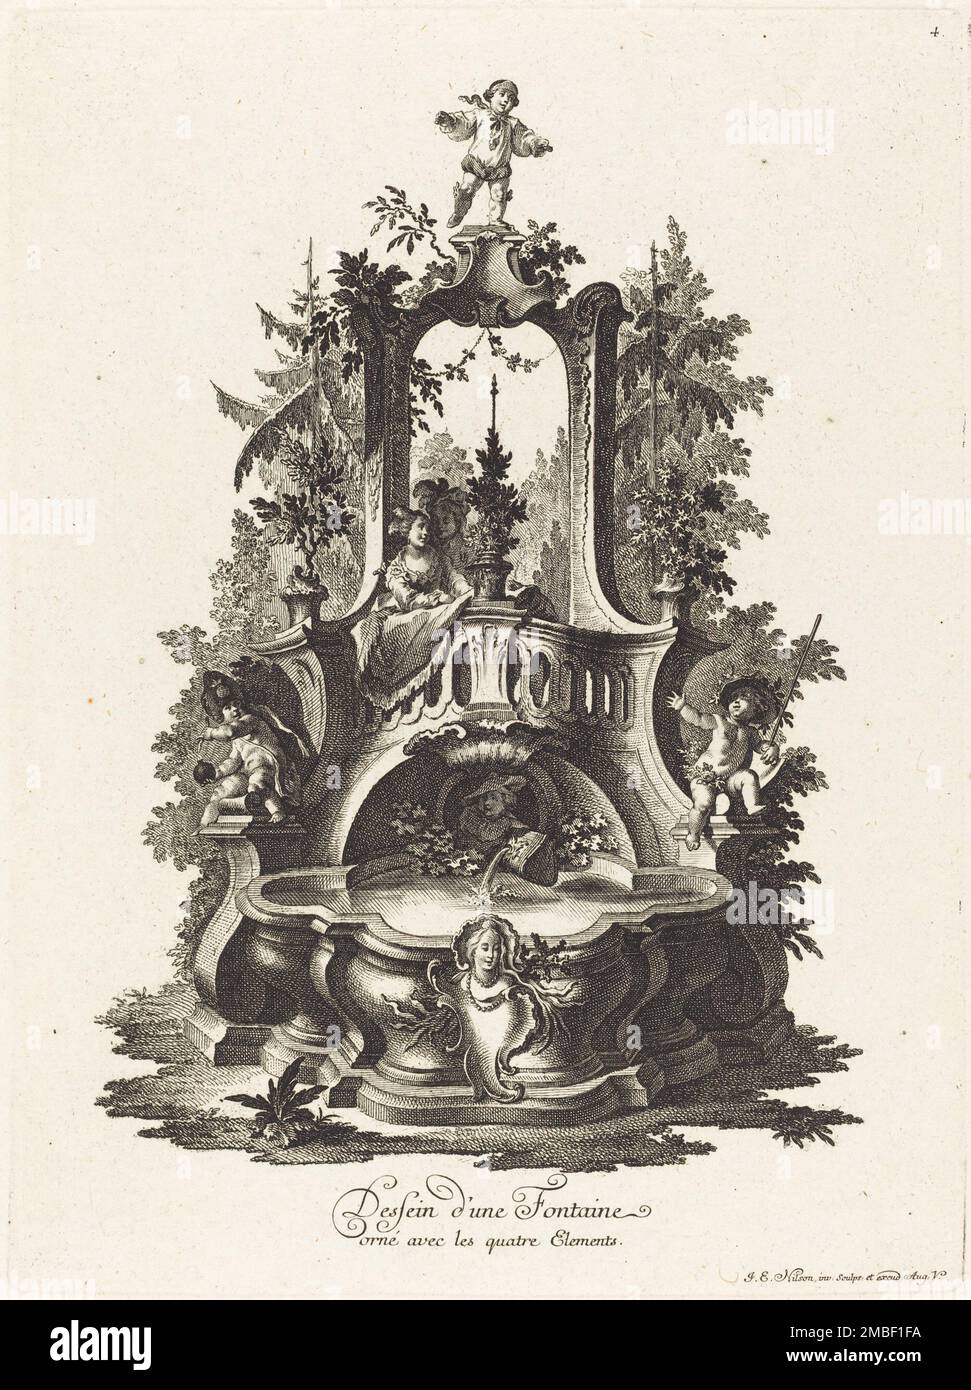 Dessein d'une Fontaine orn&#xe9; avec les quatre Elements (Design for a Fountain Decorated with the Four Elements), c. 1755/1760. Stock Photo